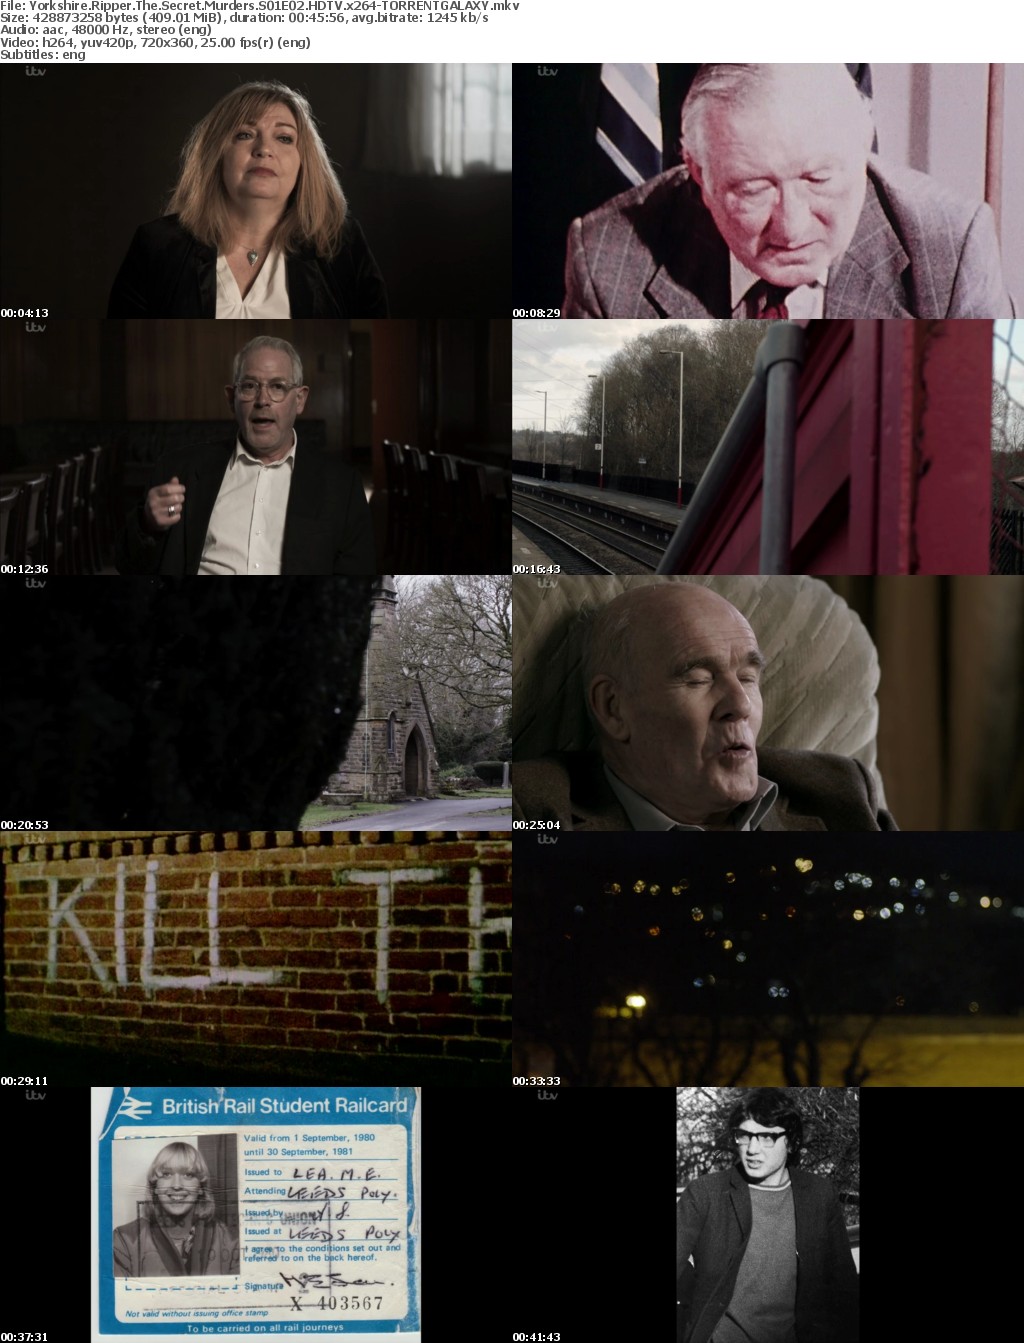 Yorkshire Ripper The Secret Murders S01E02 HDTV x264-GALAXY